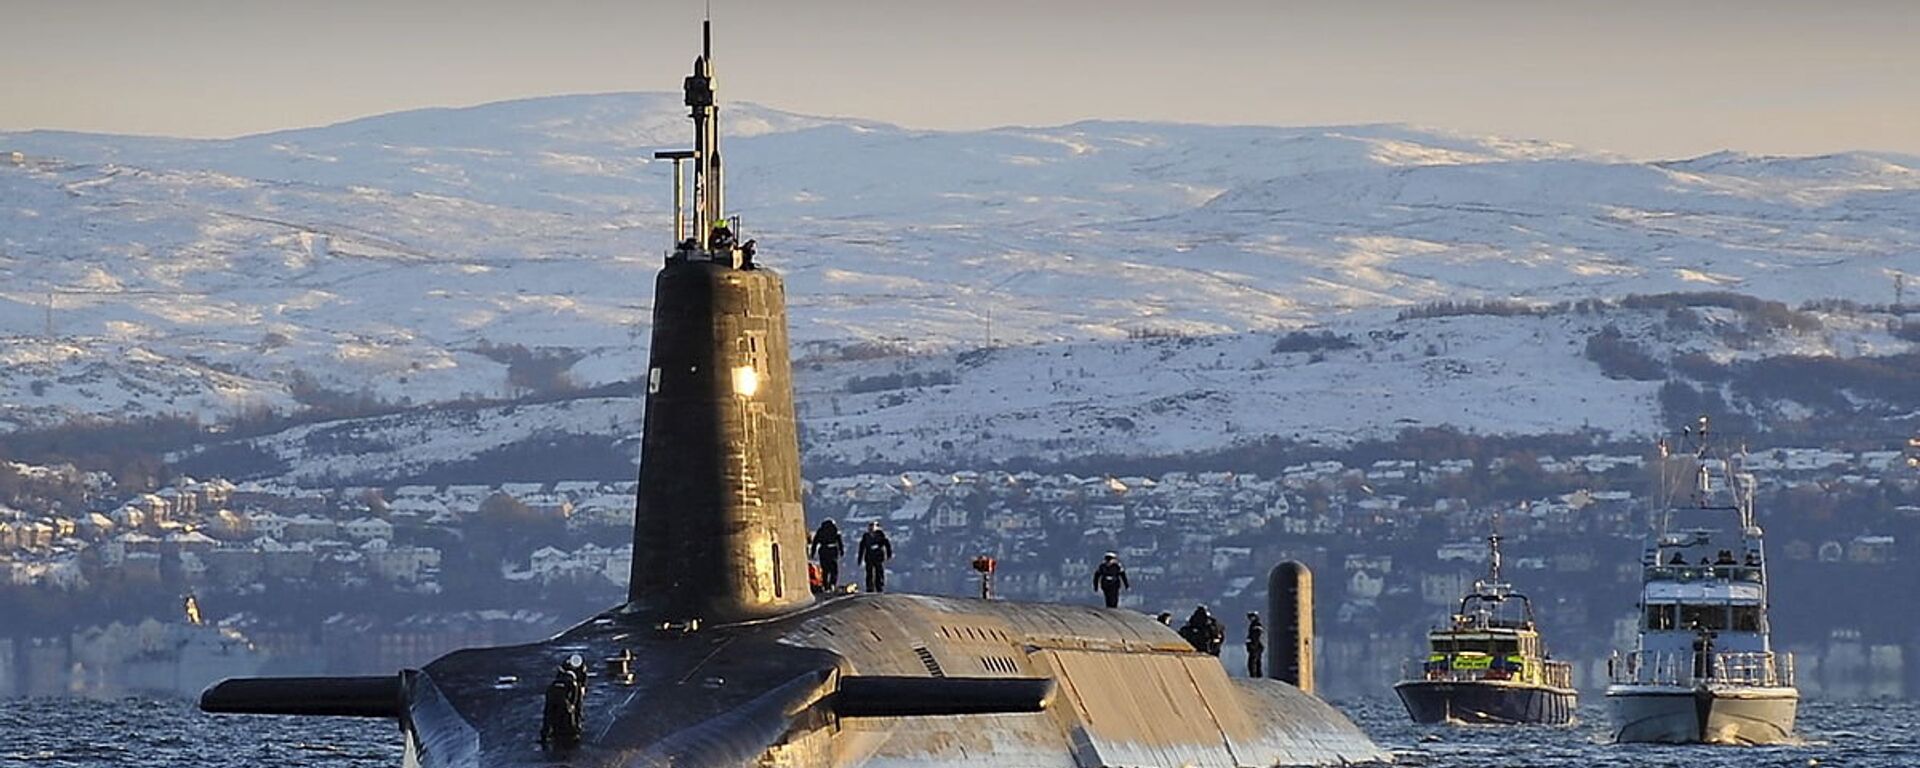 Nuclear submarine HMS Vanguard arrives back at HM Naval Base Clyde, Faslane, Scotland following a patrol - Sputnik International, 1920, 28.05.2022